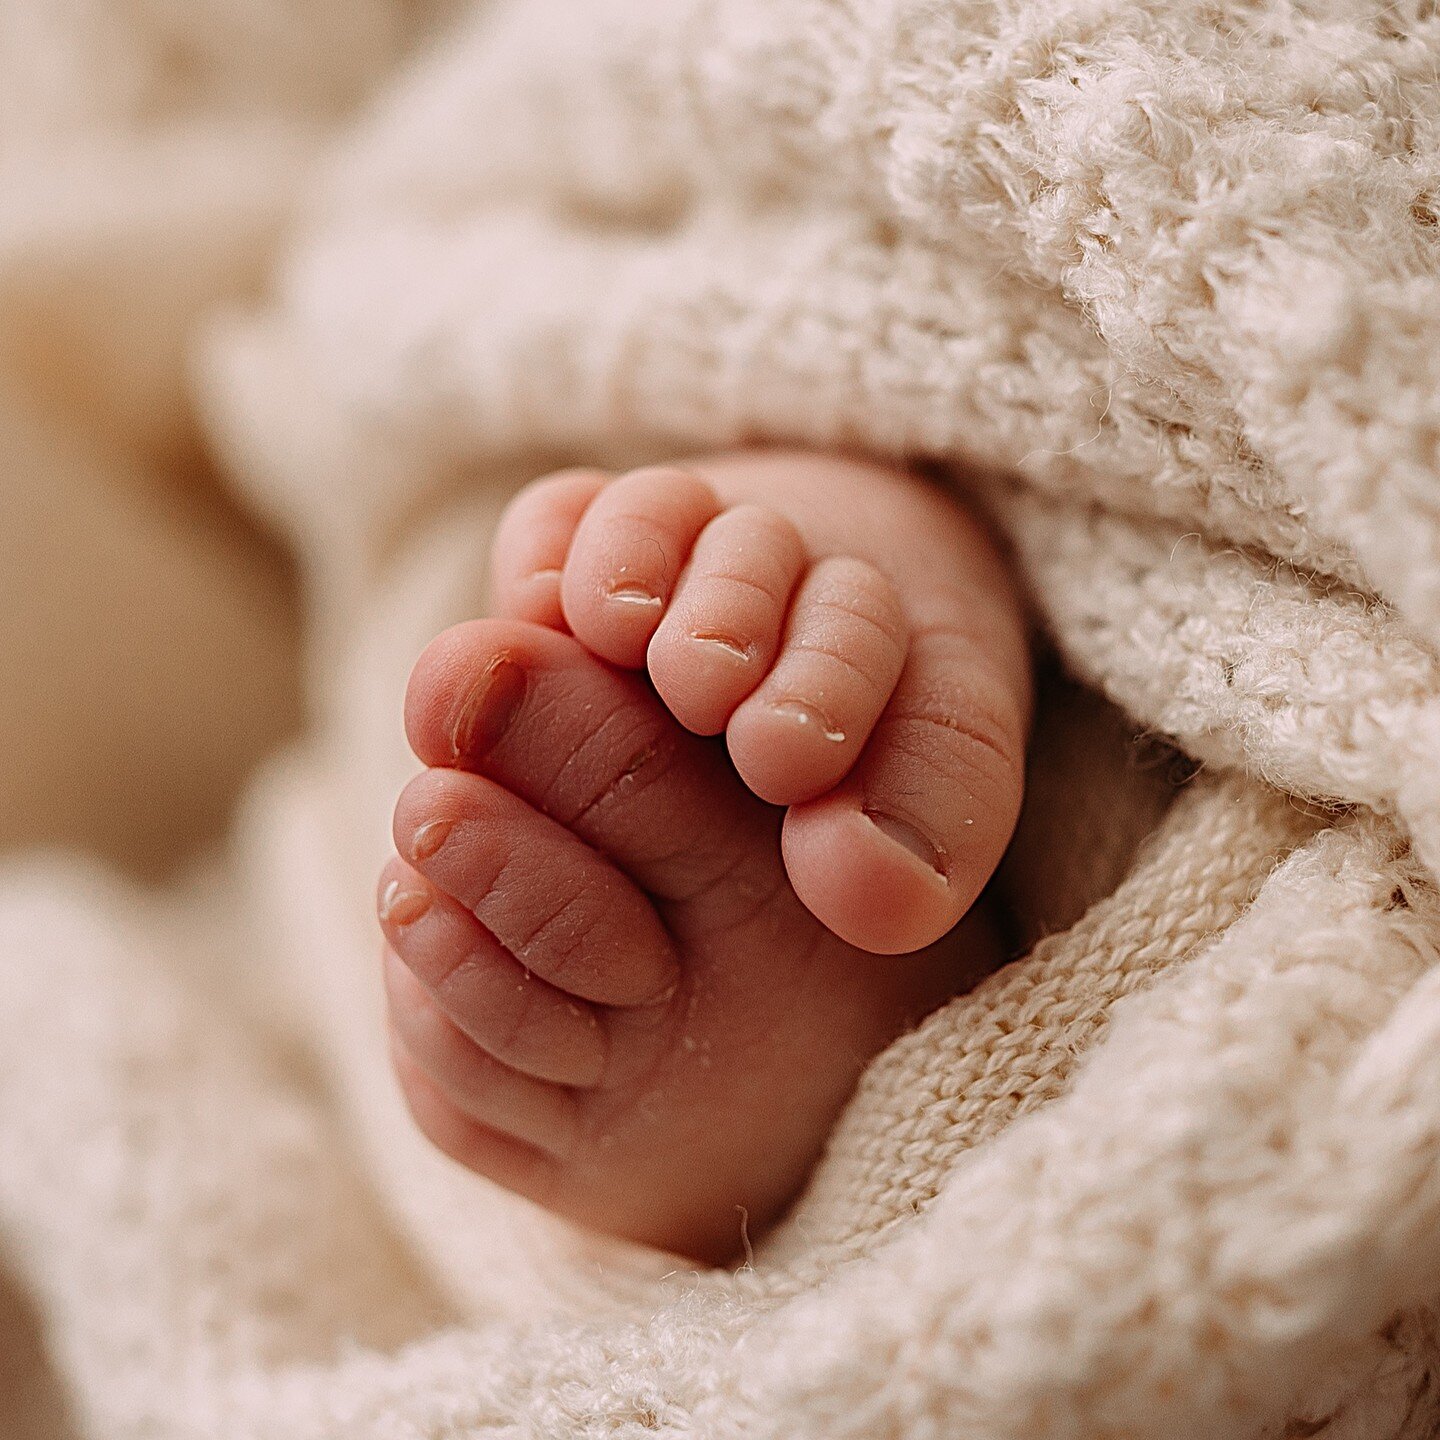 Friday toes. 
#NewbornPhotography #BabyPortraits #TinyMiracles #SweetBabies #NewbornLove #PreciousMoments #BabyPhotography #CutenessOverload #BabyBliss #InnocenceCaptured #LittleBundleOfJoy #CherishedMemories #NewbornSession #SleepingBeauty #Adorable